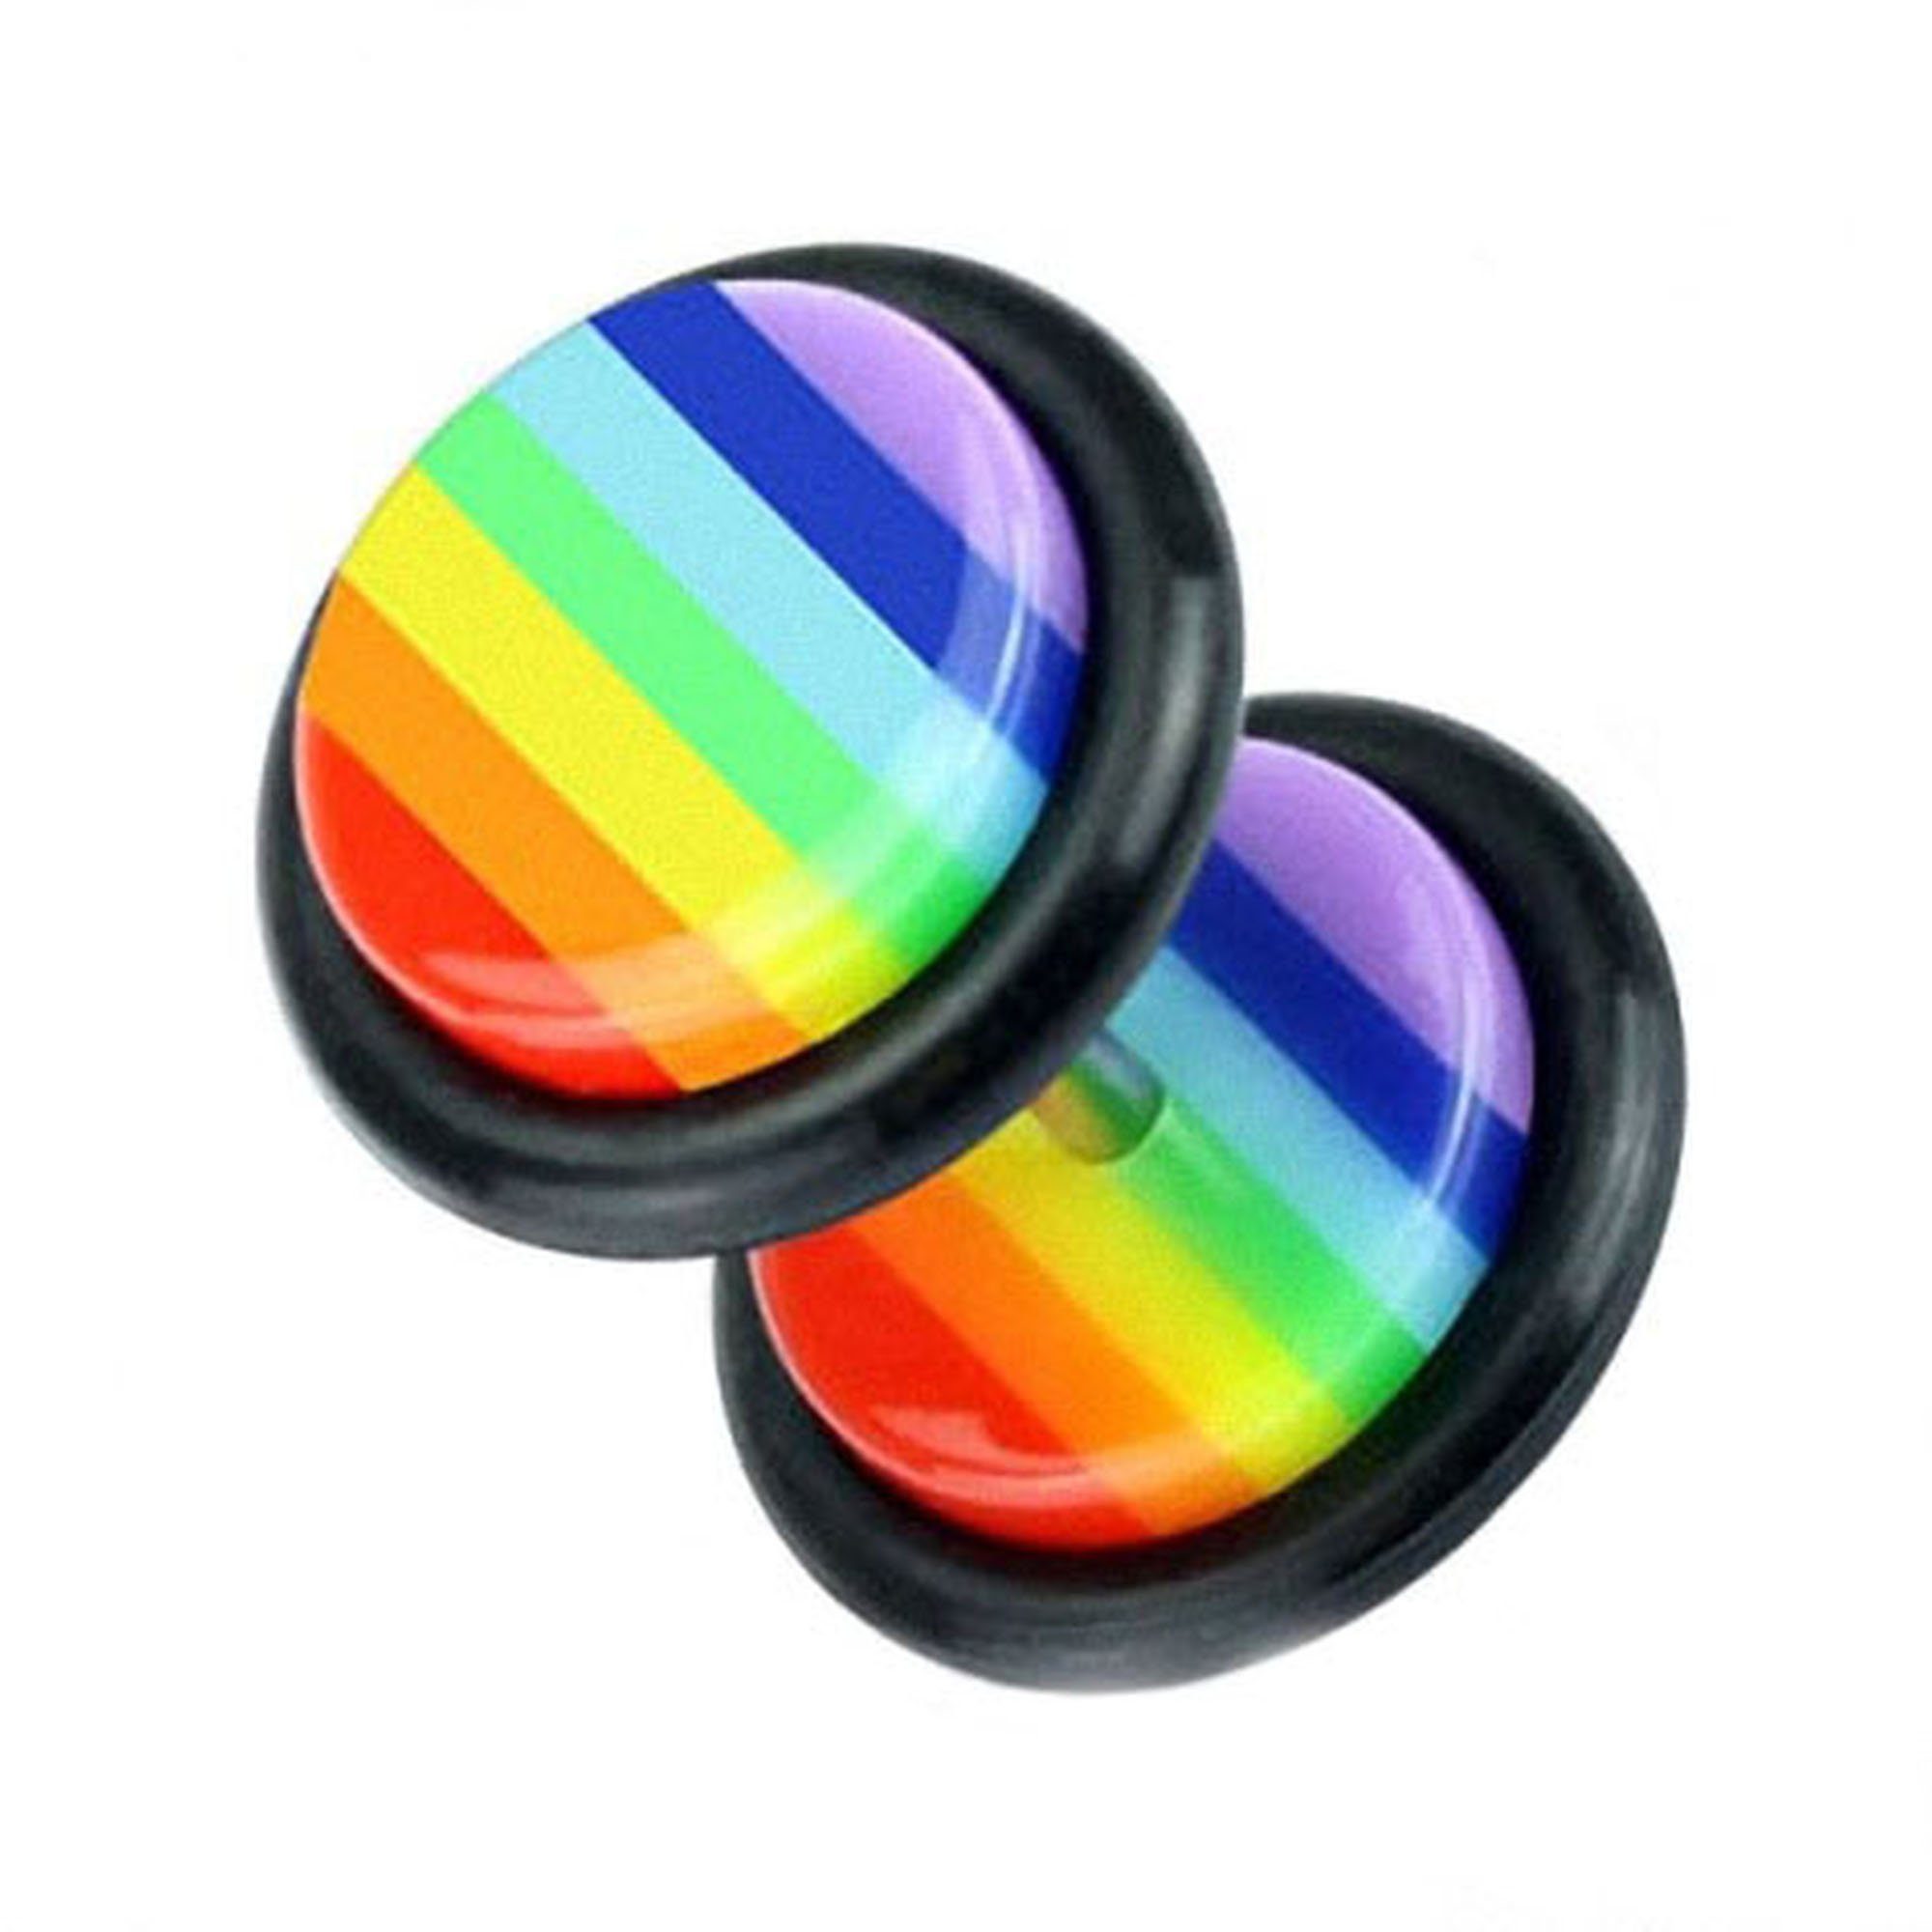 Taffstyle Piercing-Set Piercing Platte Stecker Regenbogen Rainbow Bunt, Piercing UV Ohrring Ohrstecker Fake Ohr Plug Flesh Tunnel Ohrpiercing